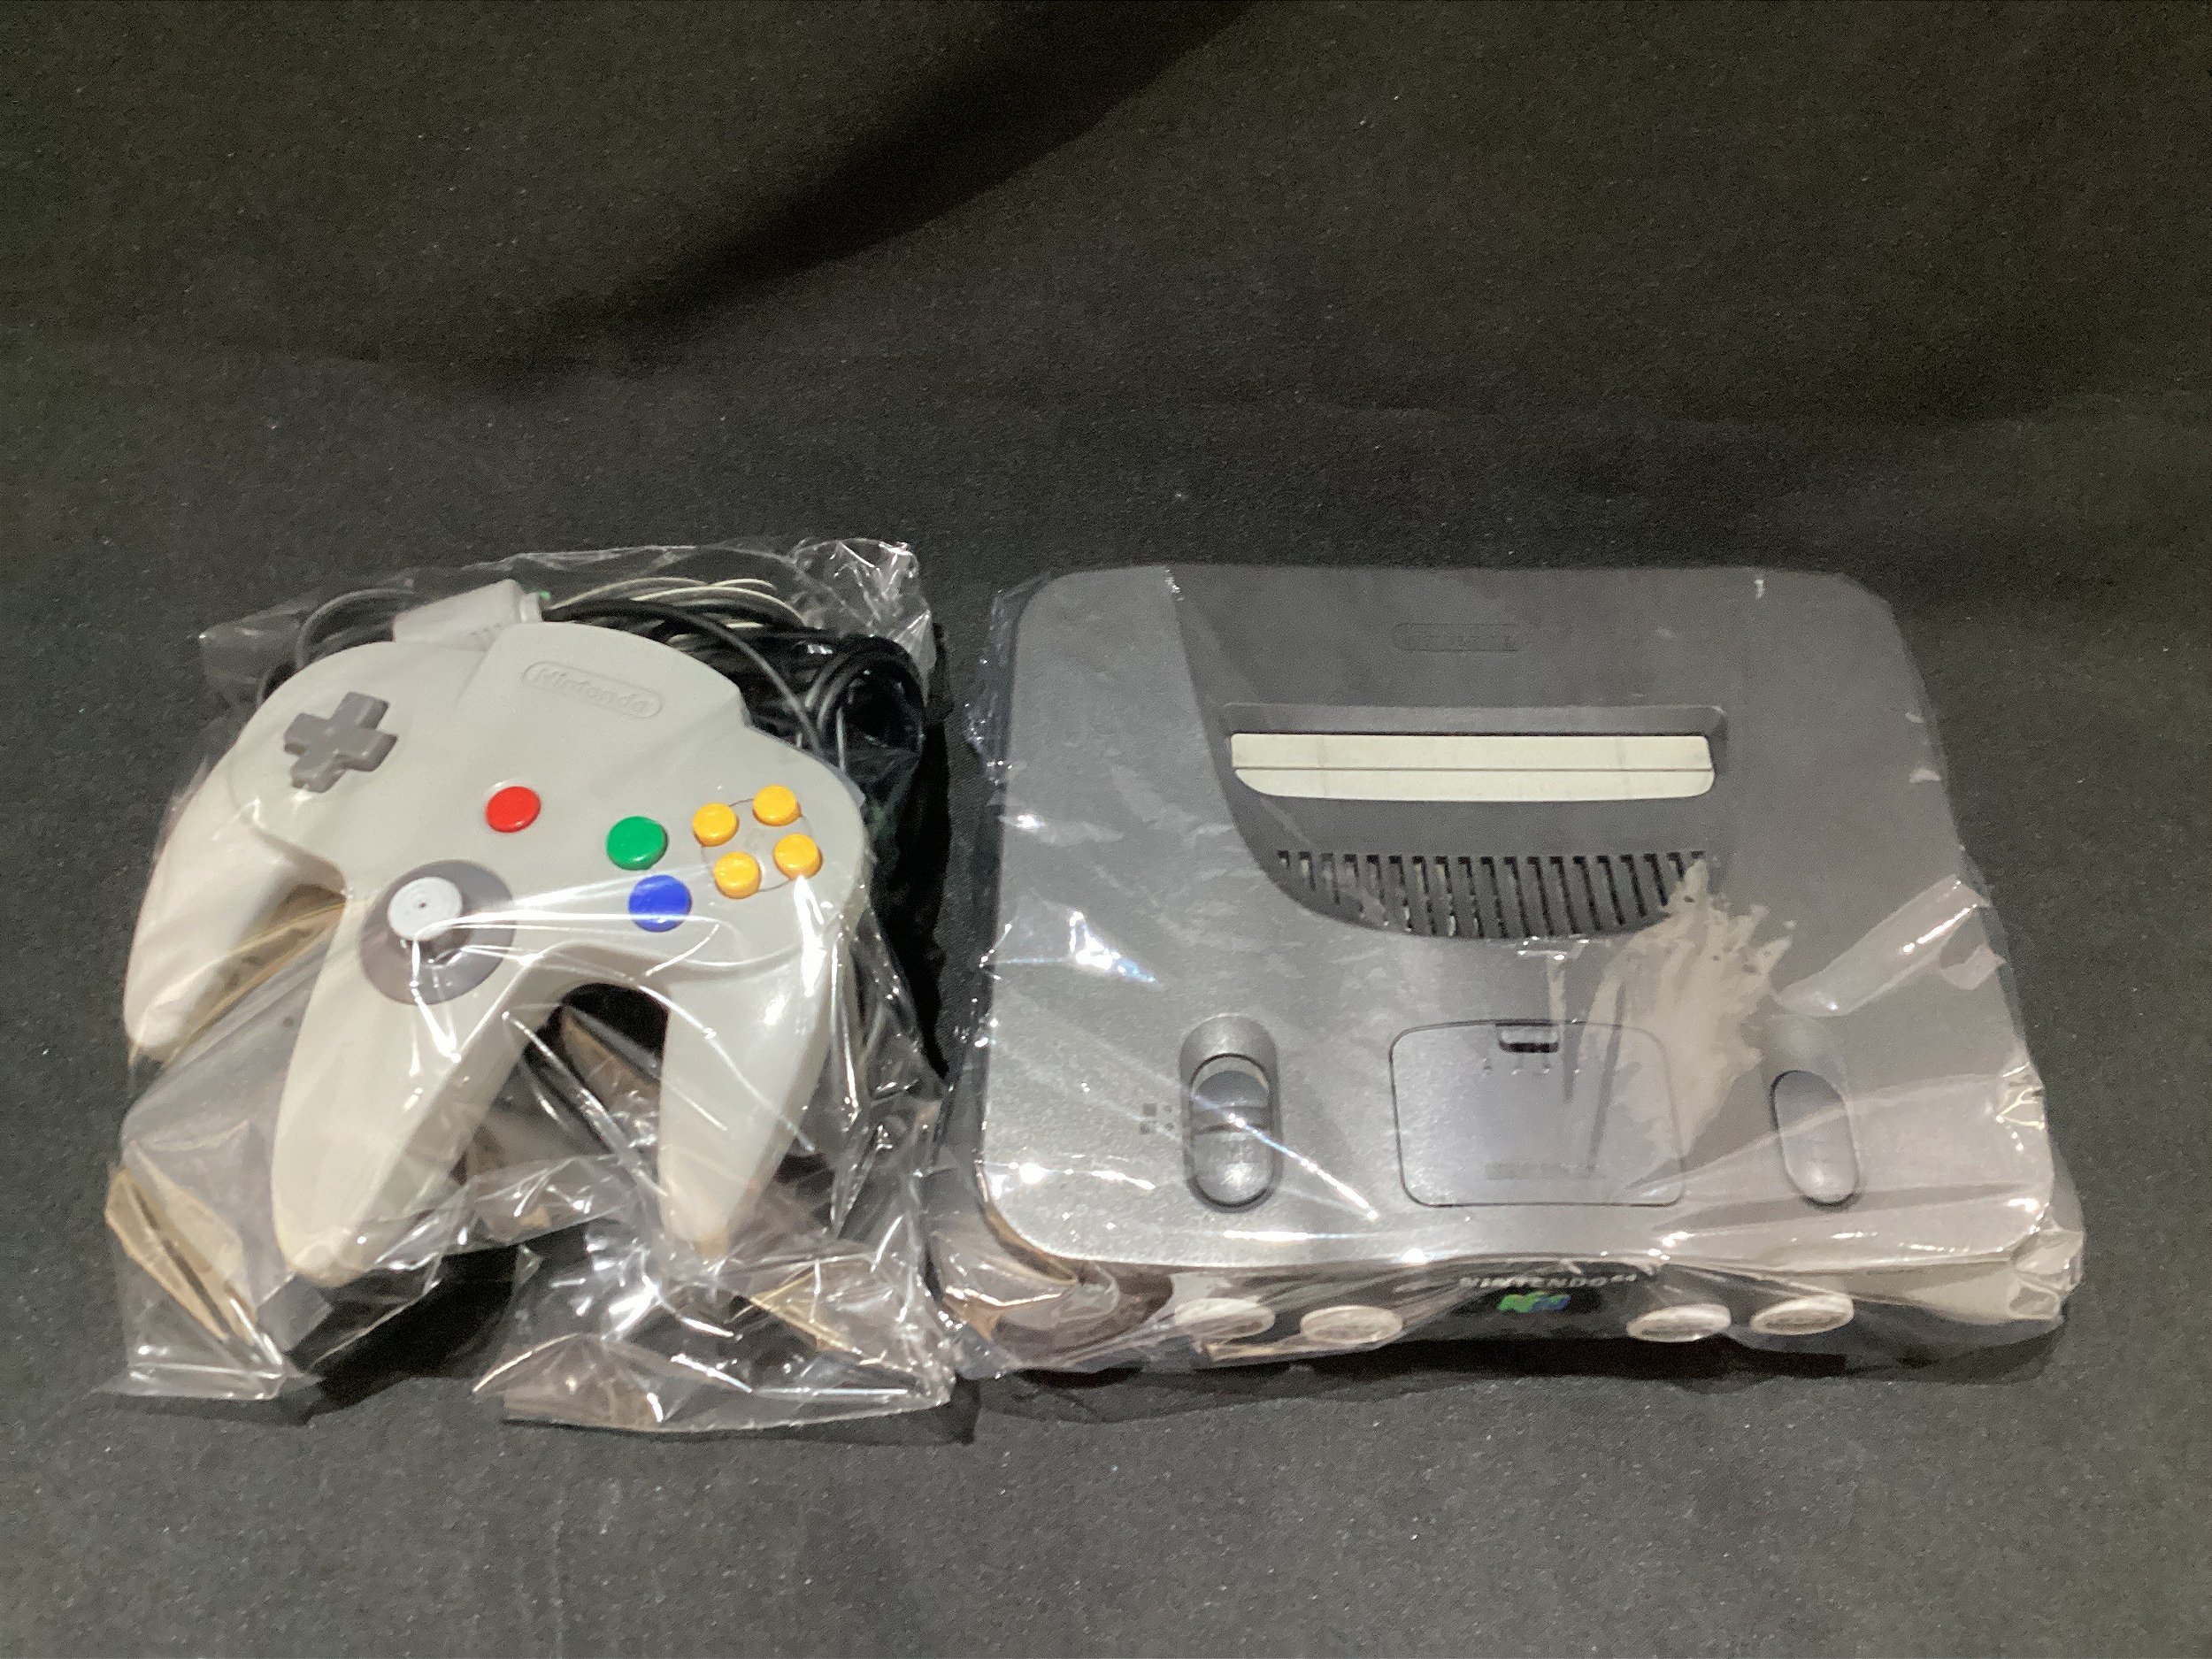 Nintendo Switch receberá jogos de Nintendo 64 e Mega Drive